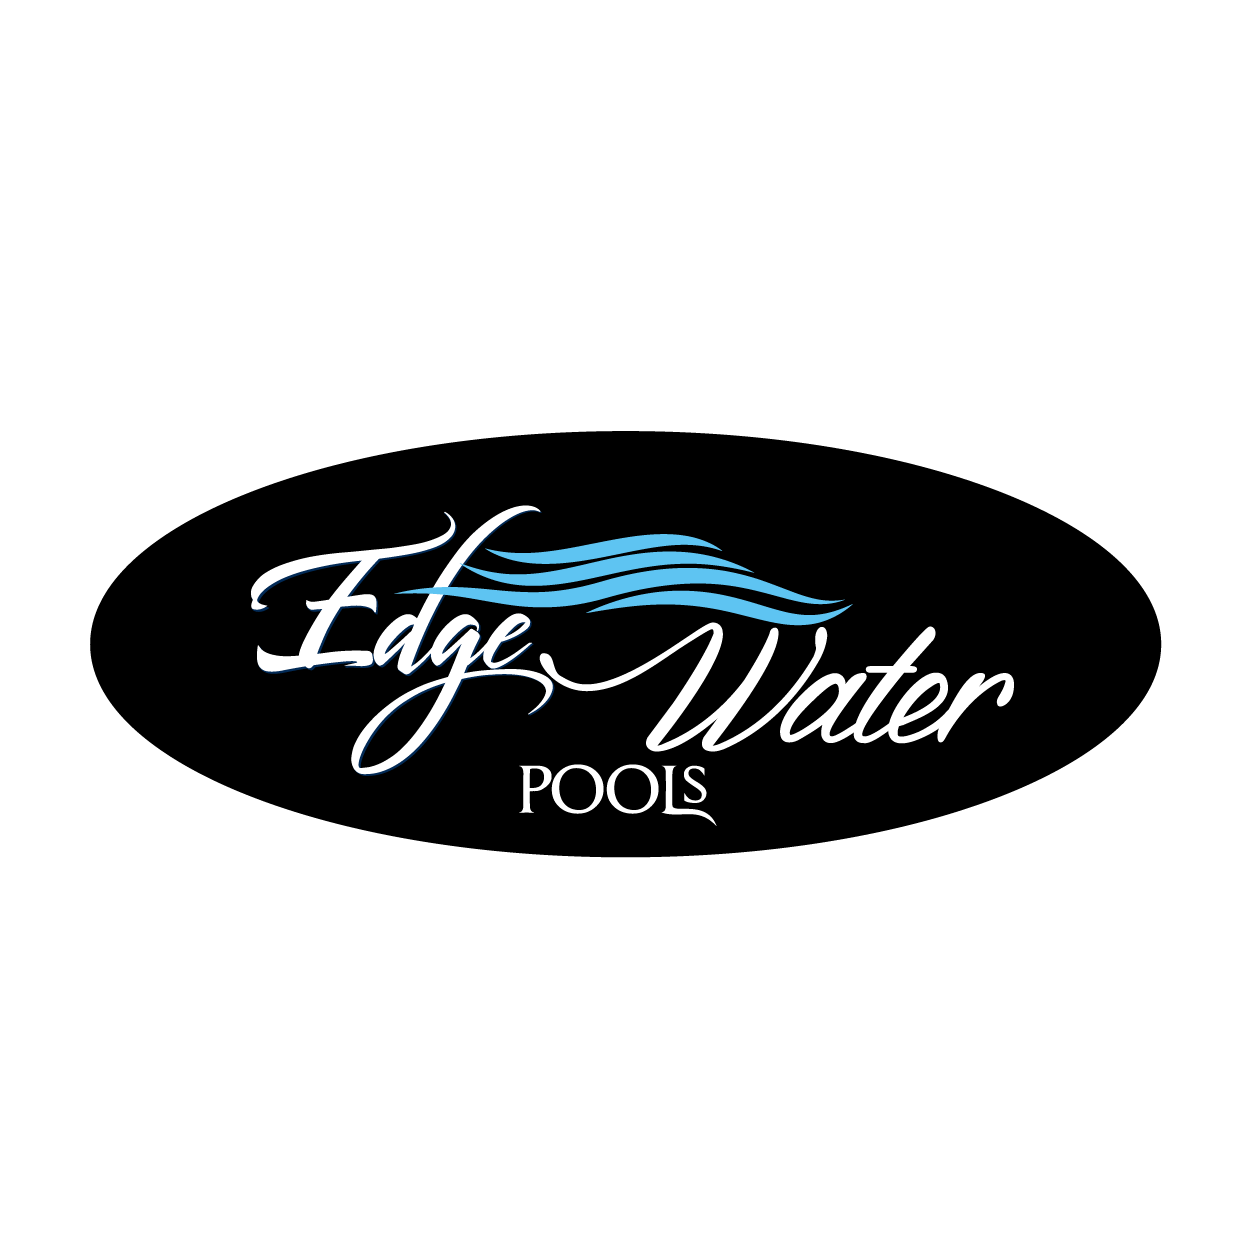 Edge Water Pools LLC Logo